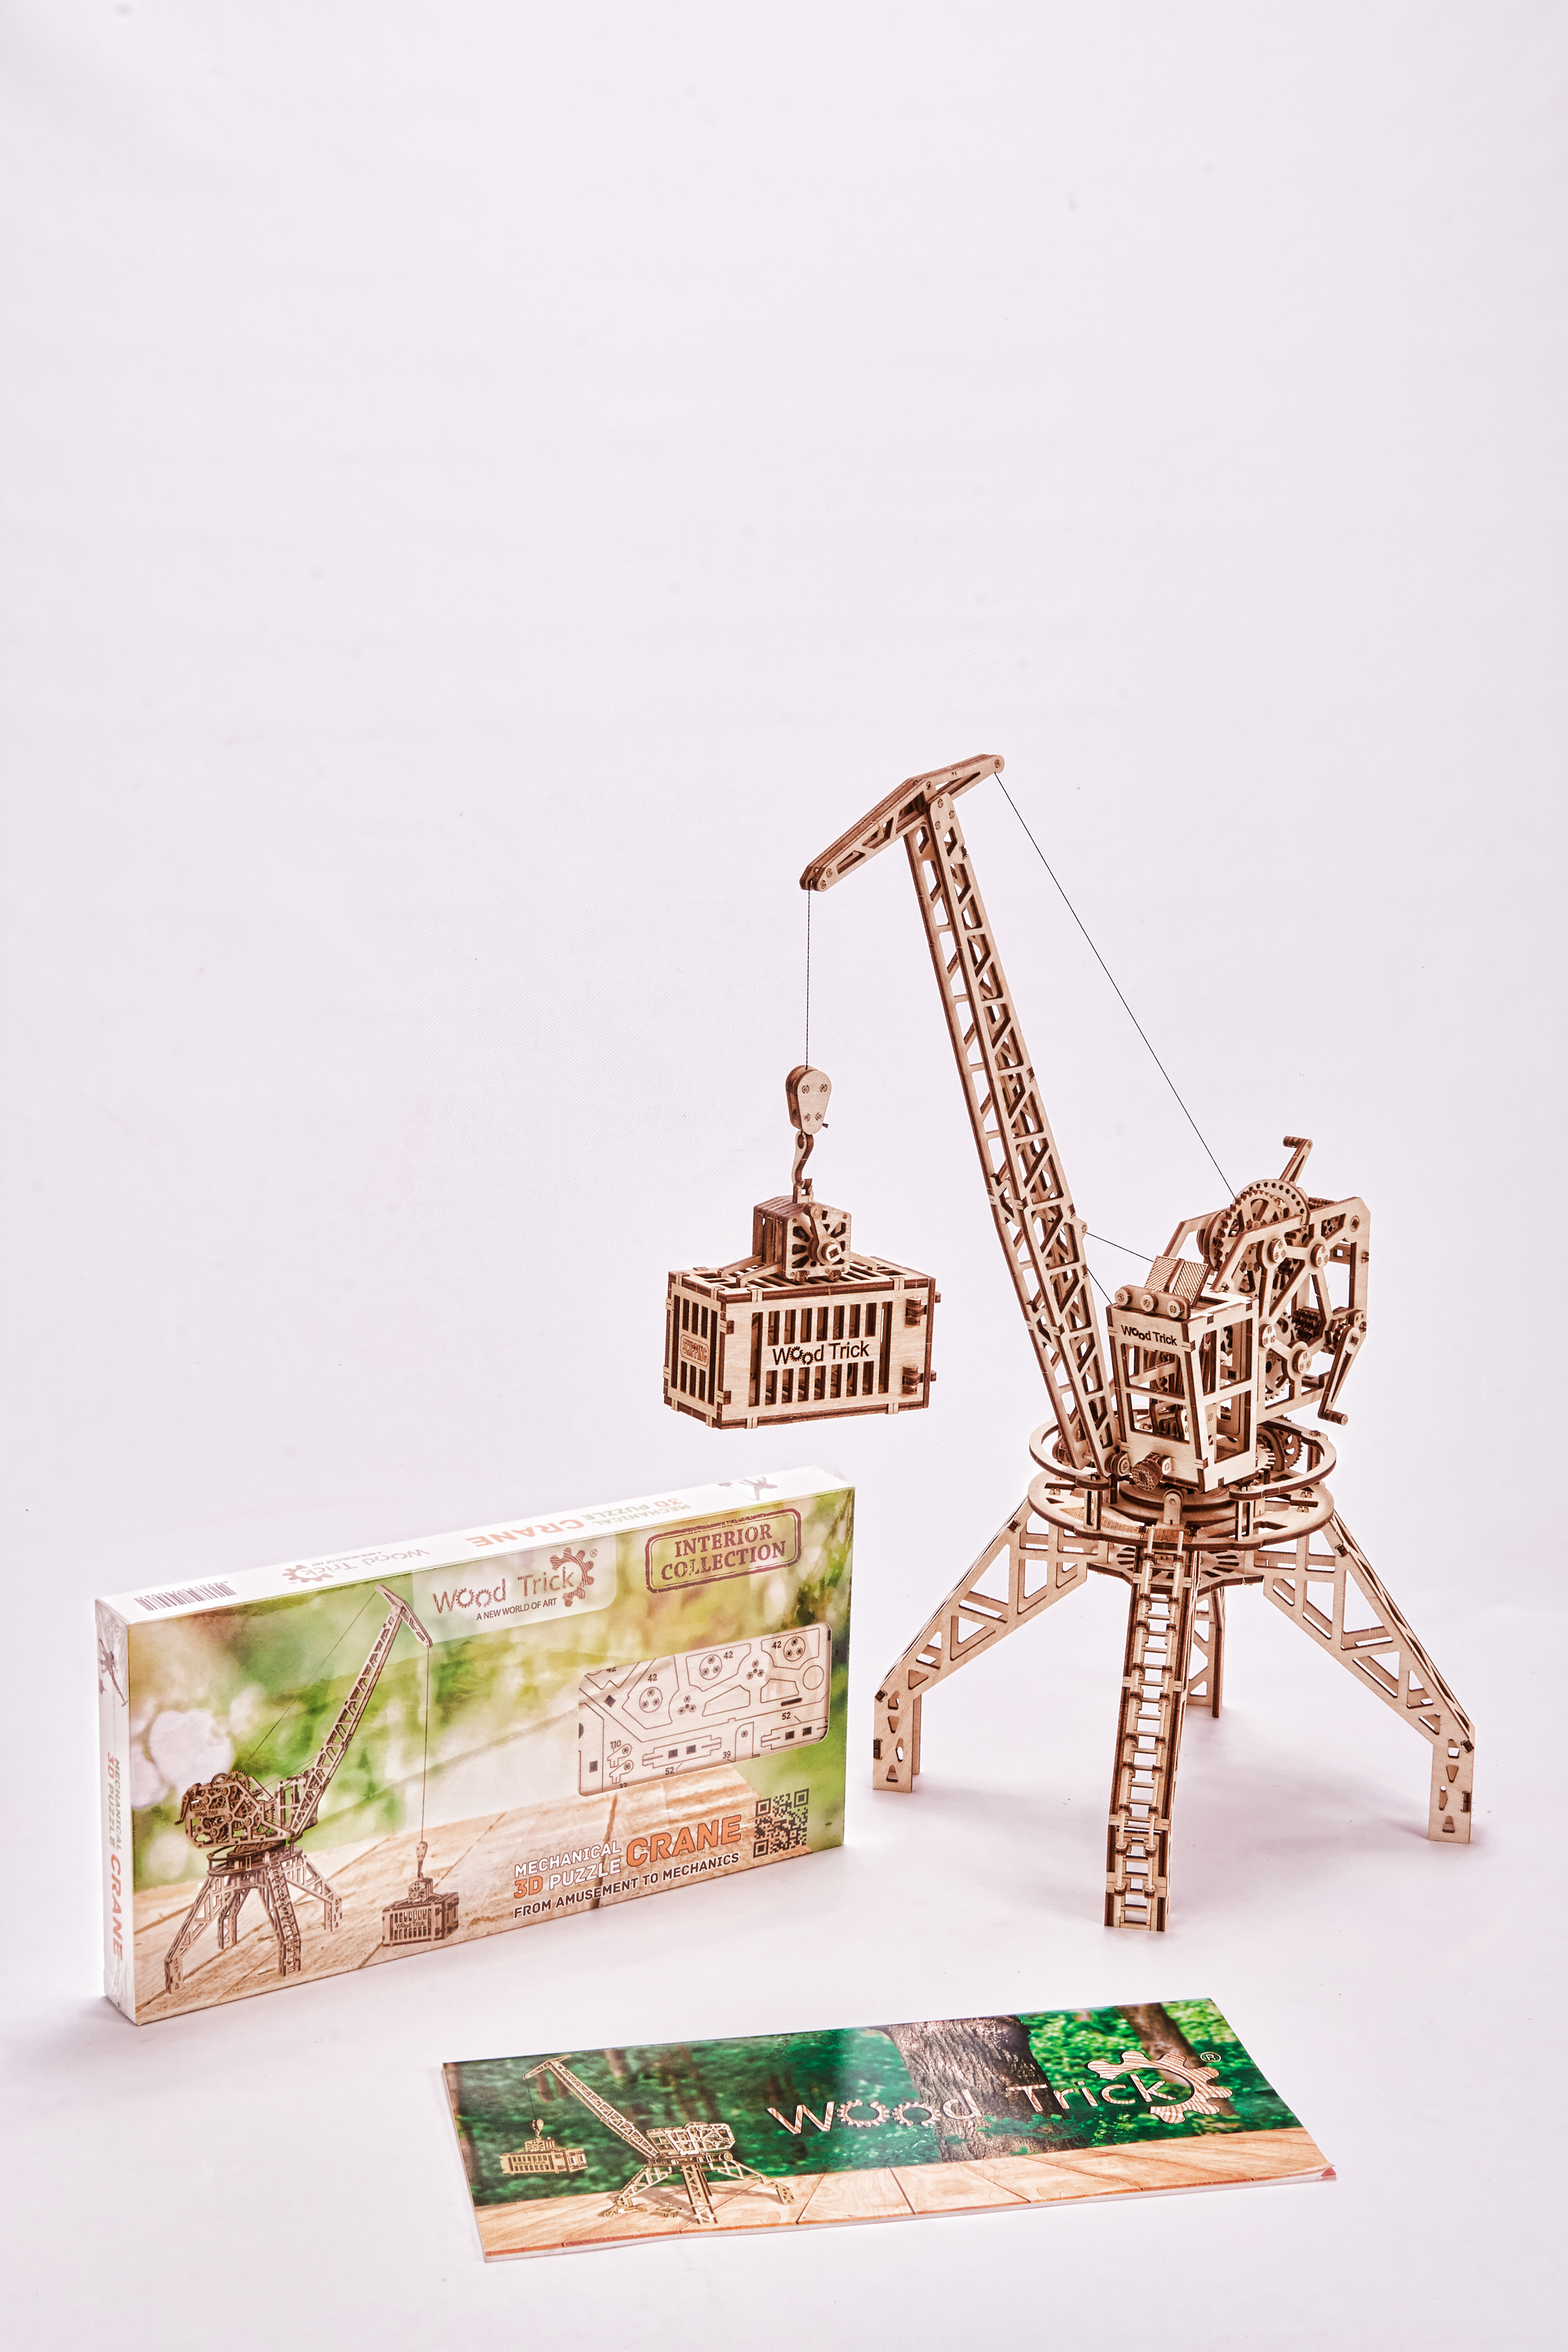 Wood Trick Tower Crane Building Mechanical Models 3d Wooden Puzzles DIY Toy for sale online 